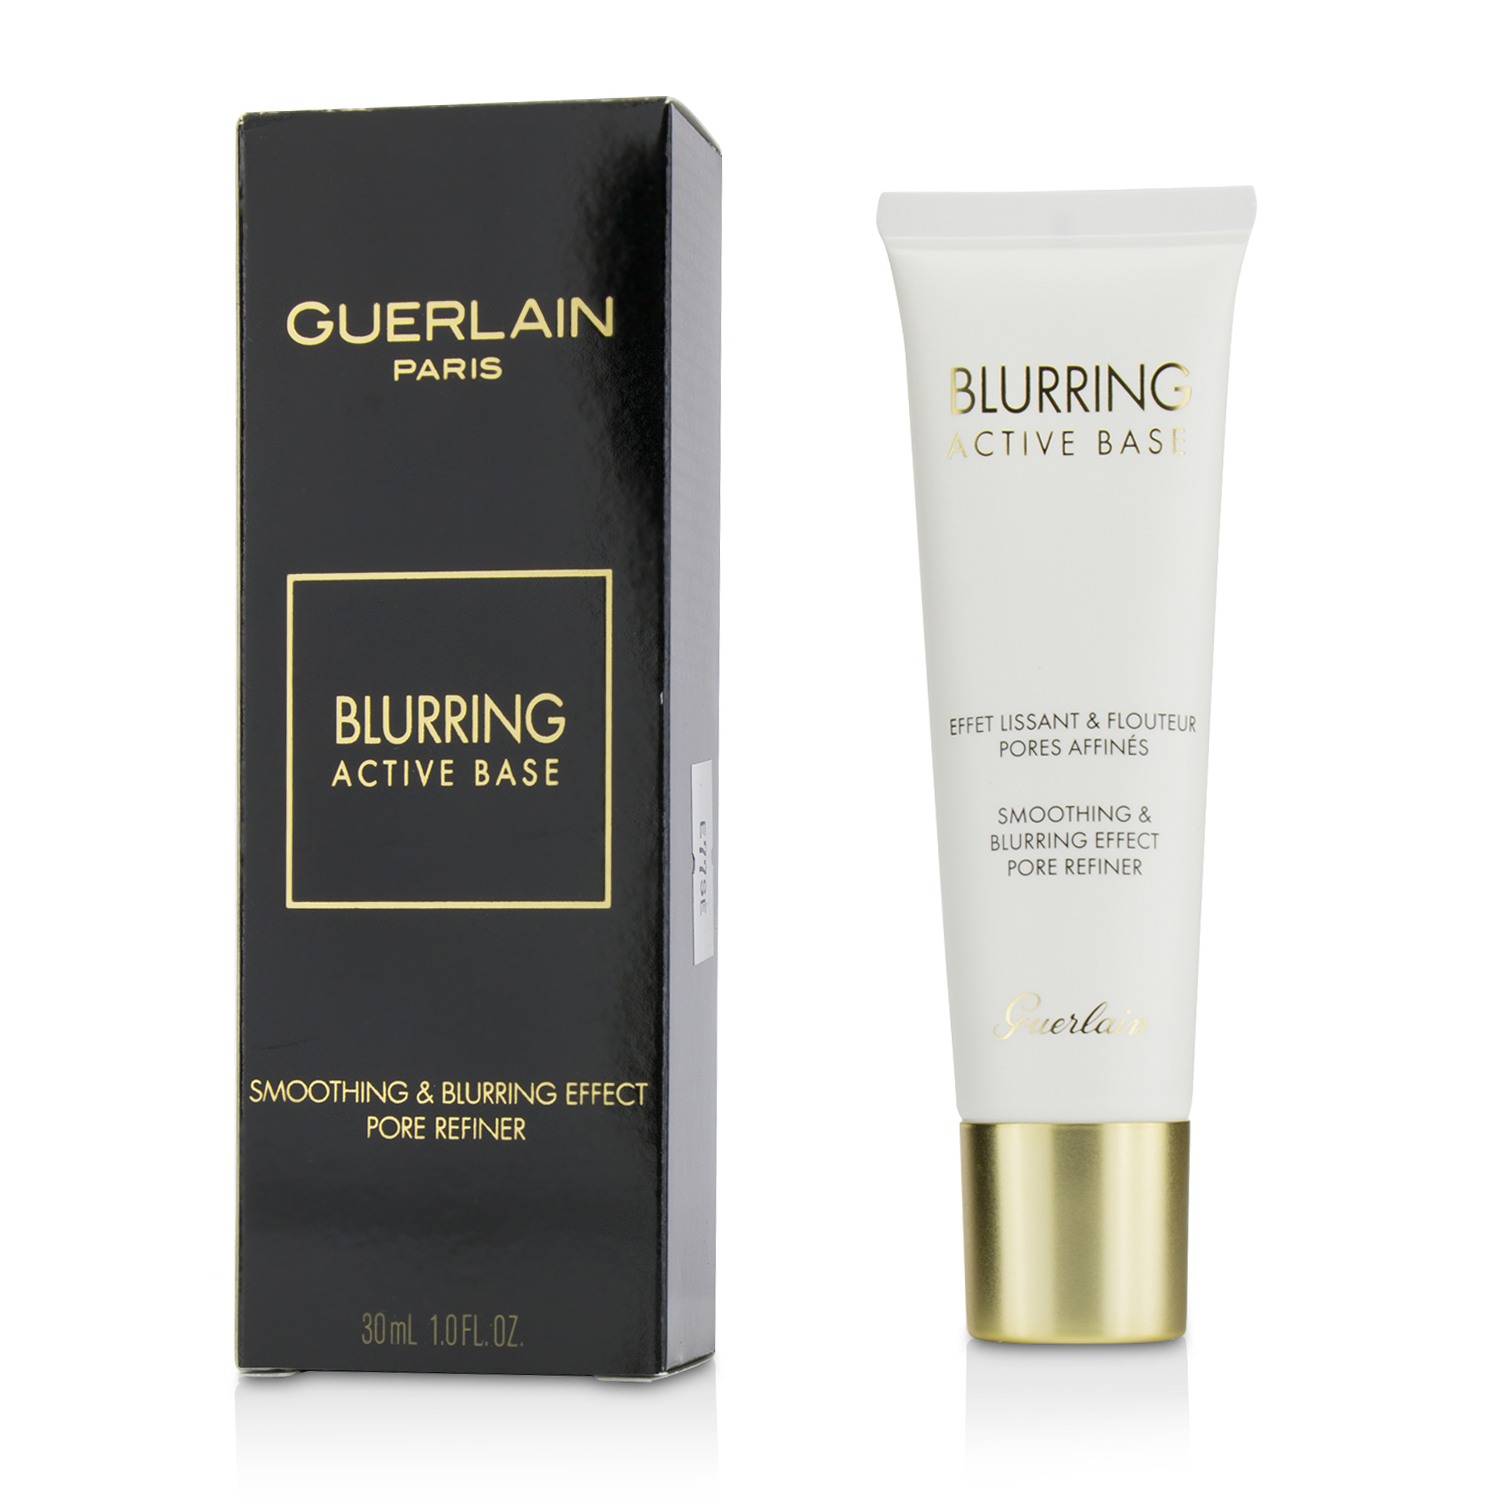 Blurring Active Base Guerlain Image